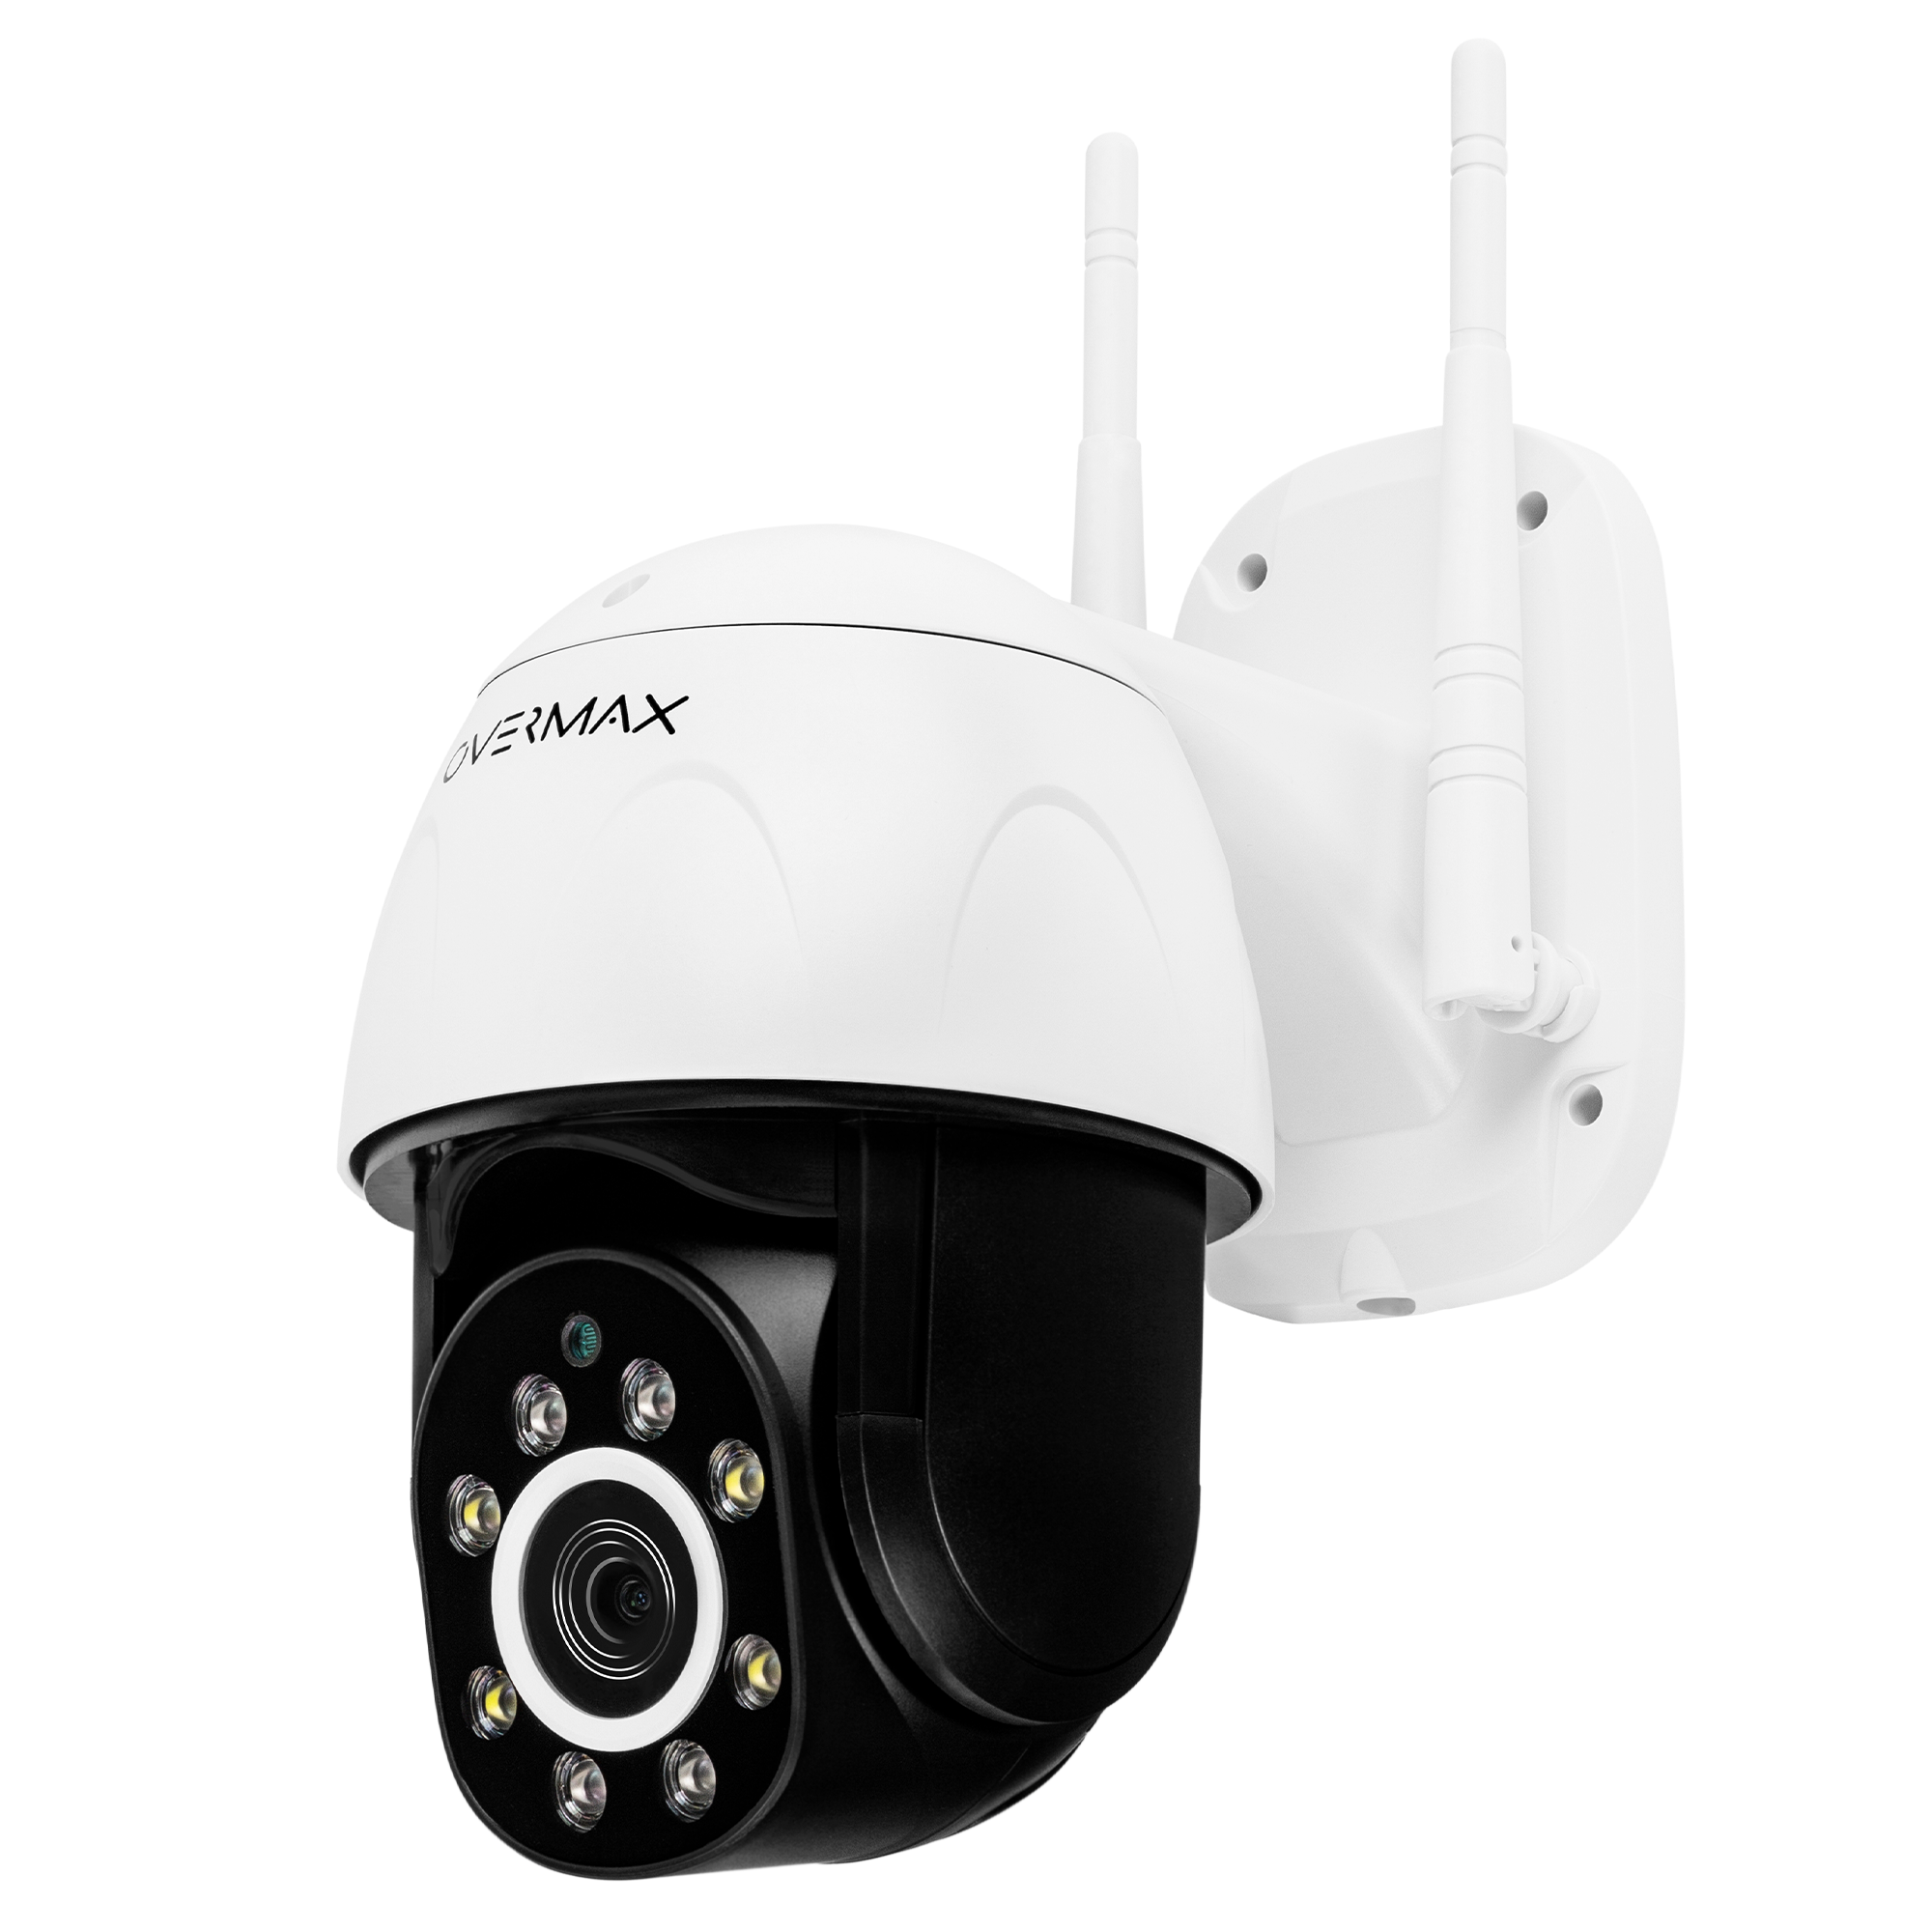 OVERMAX Camspot 4.9 Pro, Auflösung x Überwachungskamera, px 2.5K 1288 2288 - Video